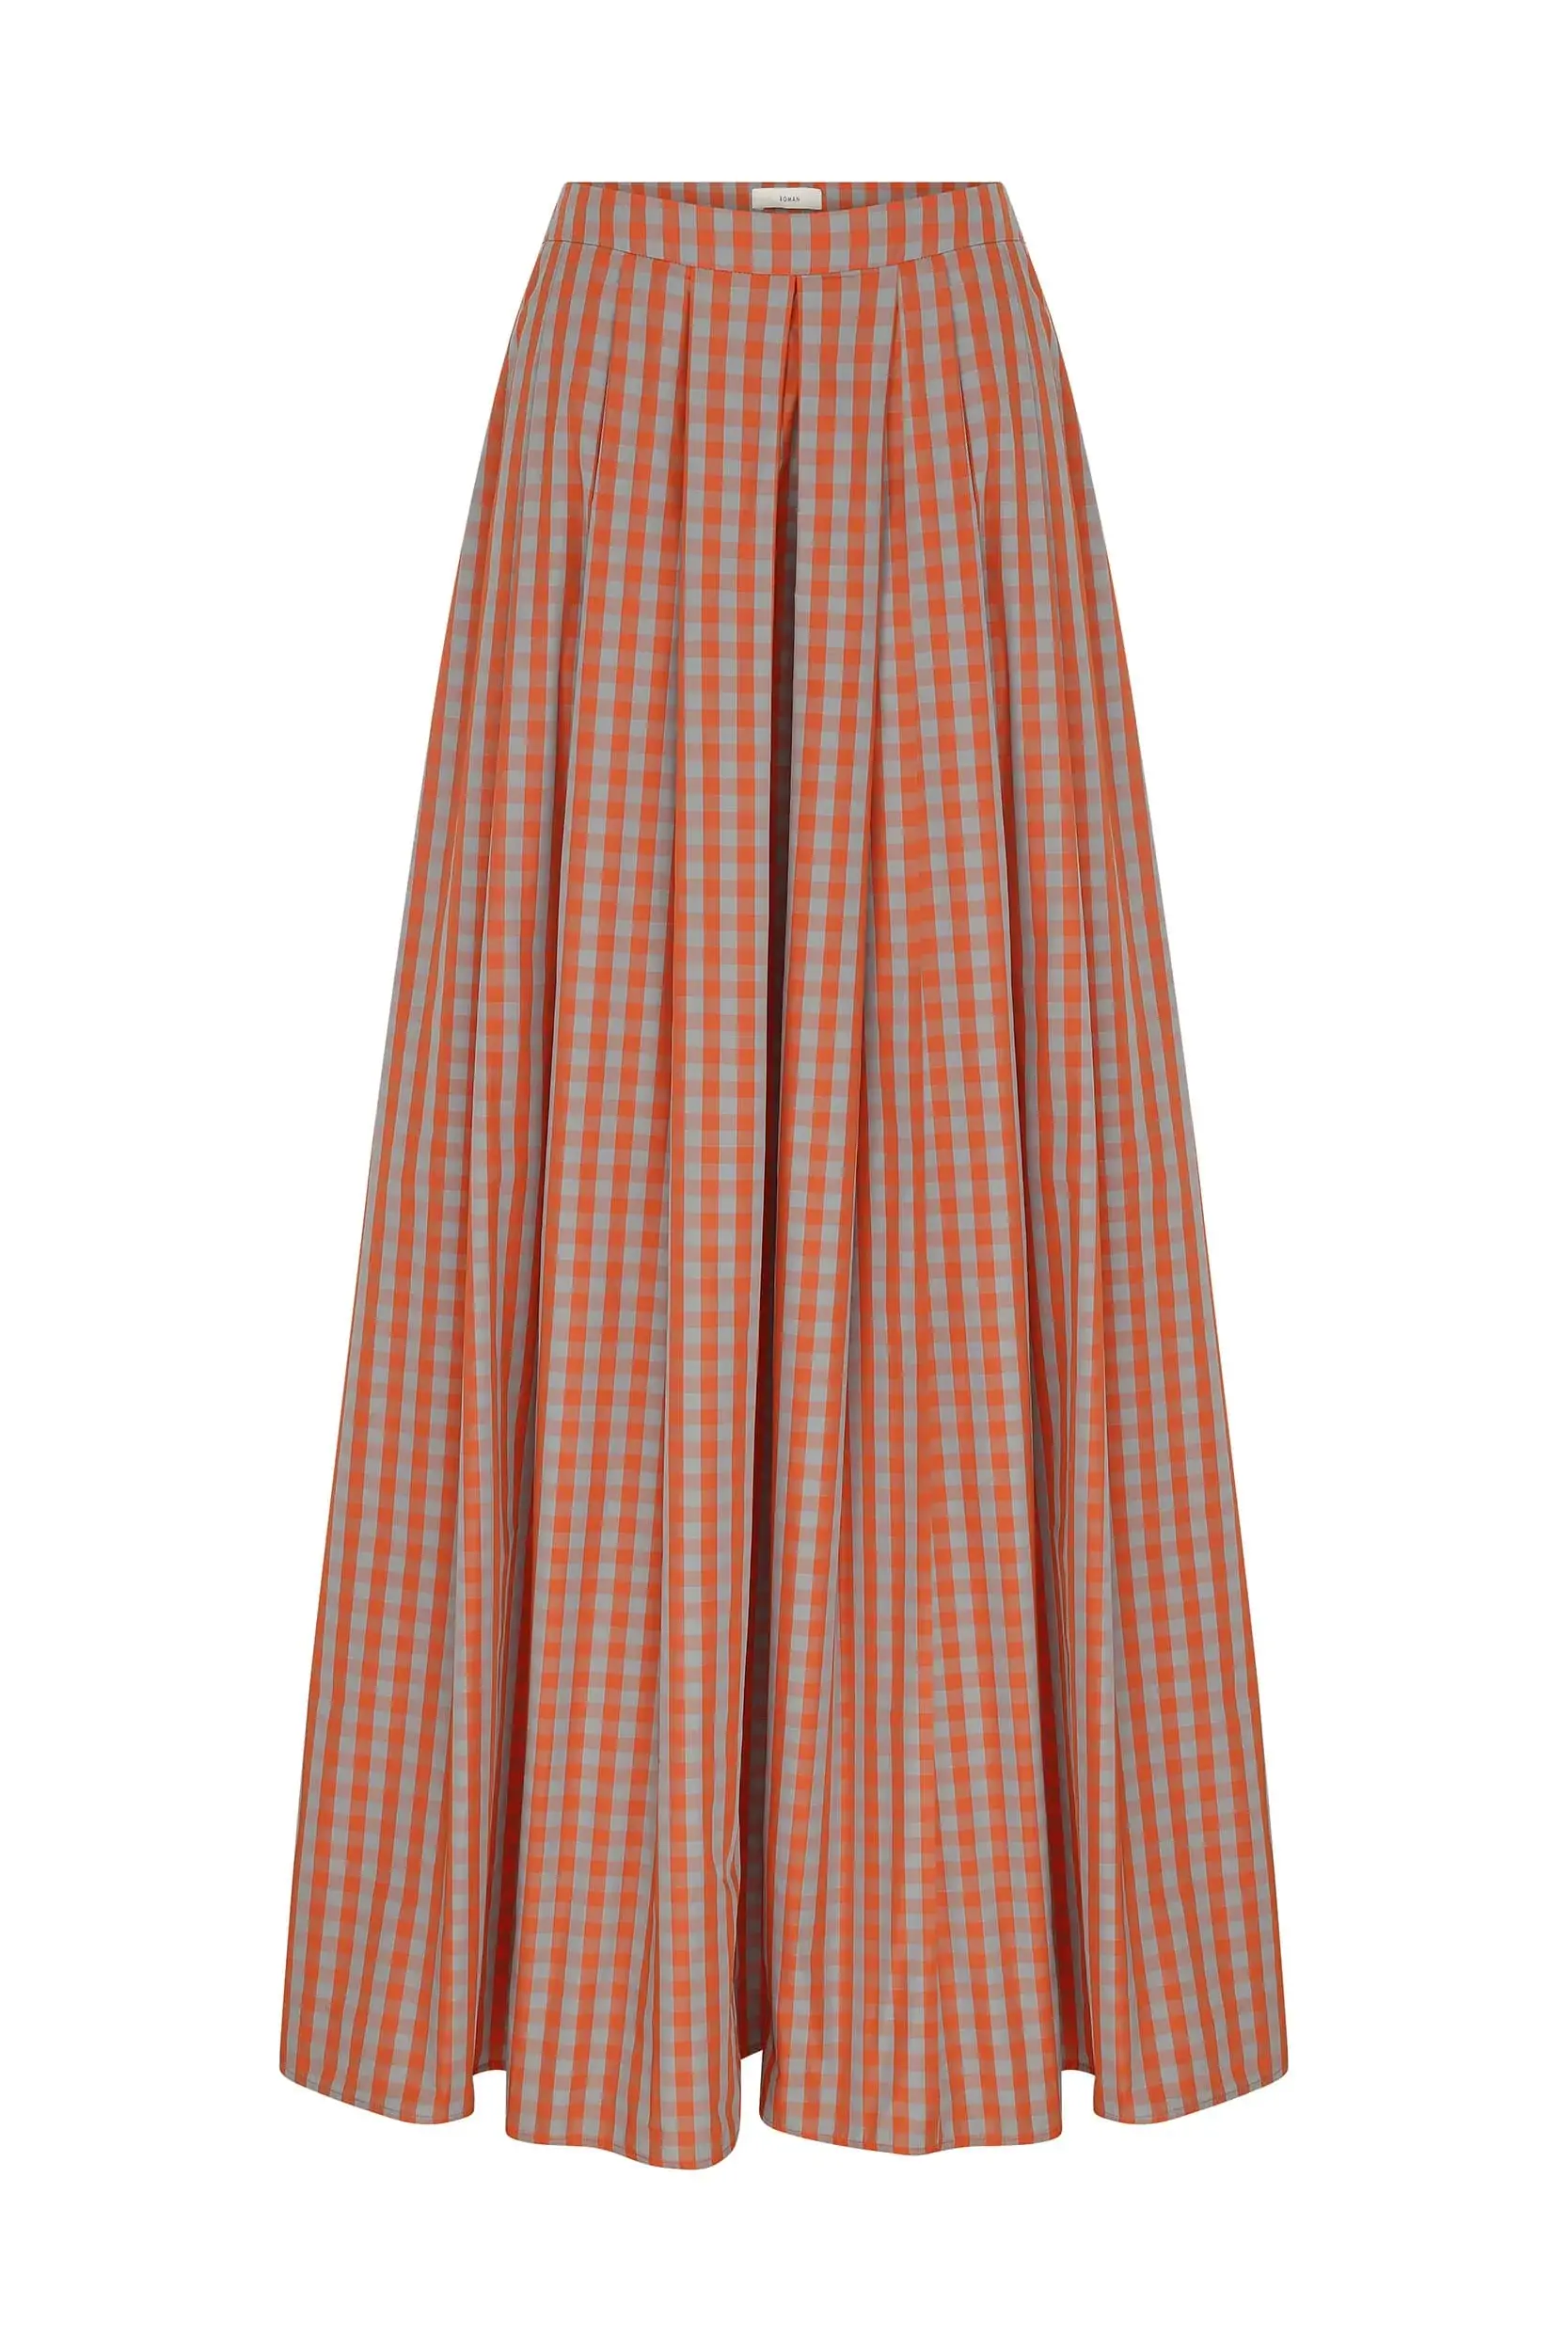 Roman Check Patterned Long Skirt - 4 / ORIGINAL. 1